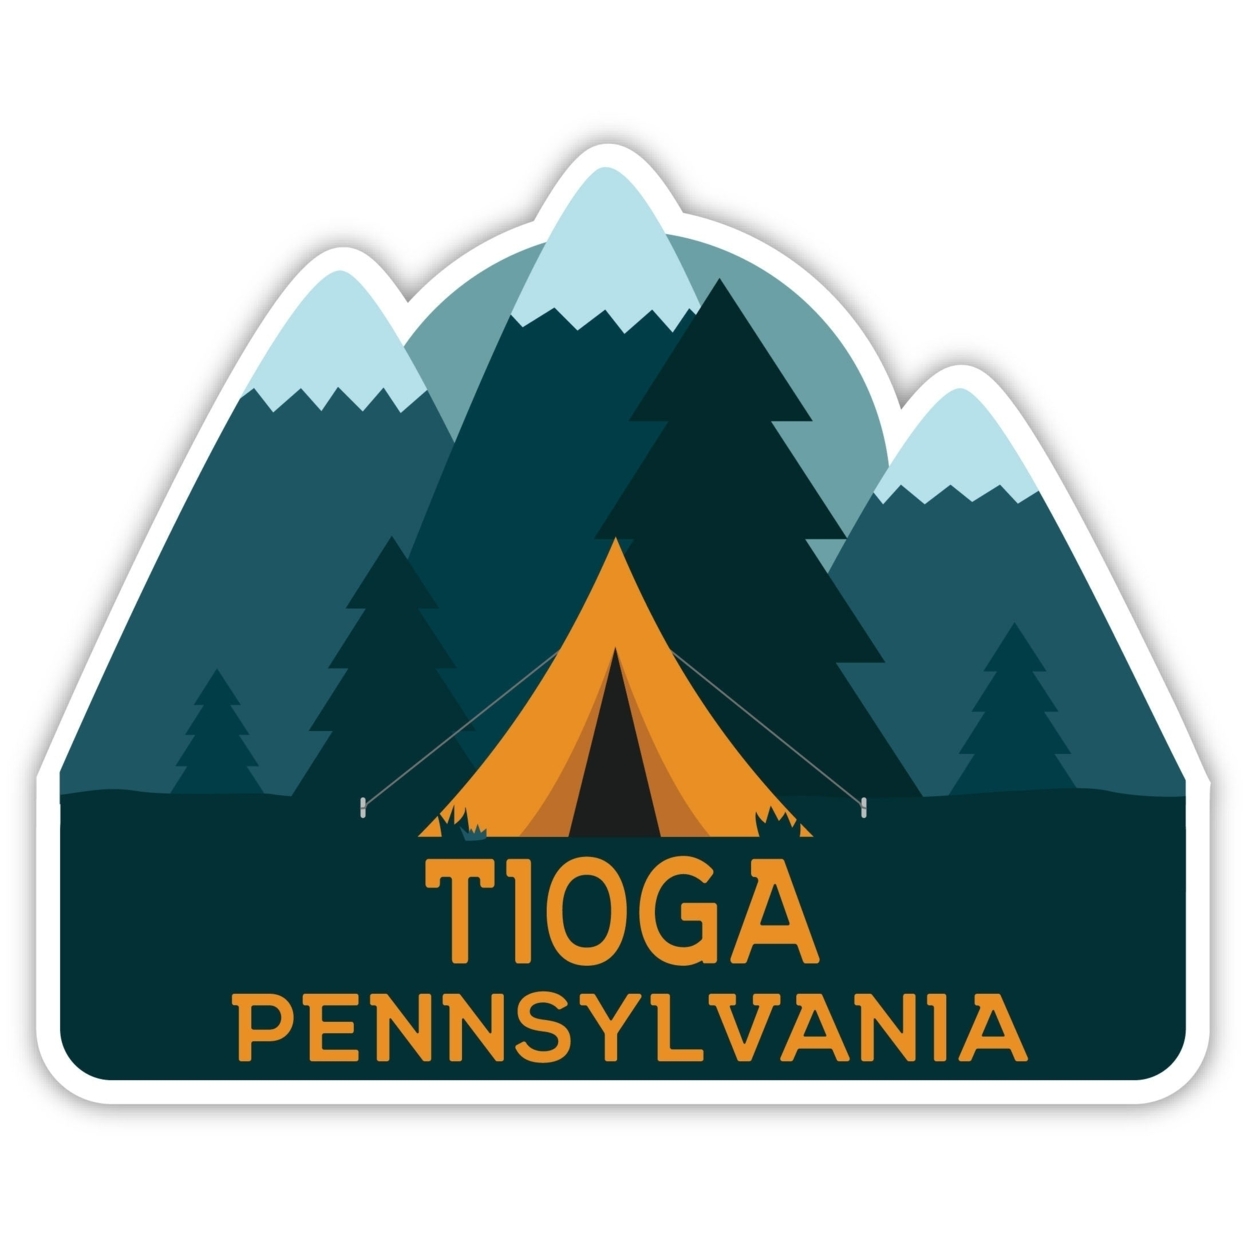 Tioga Pennsylvania Souvenir Decorative Stickers (Choose Theme And Size) - Single Unit, 2-Inch, Tent